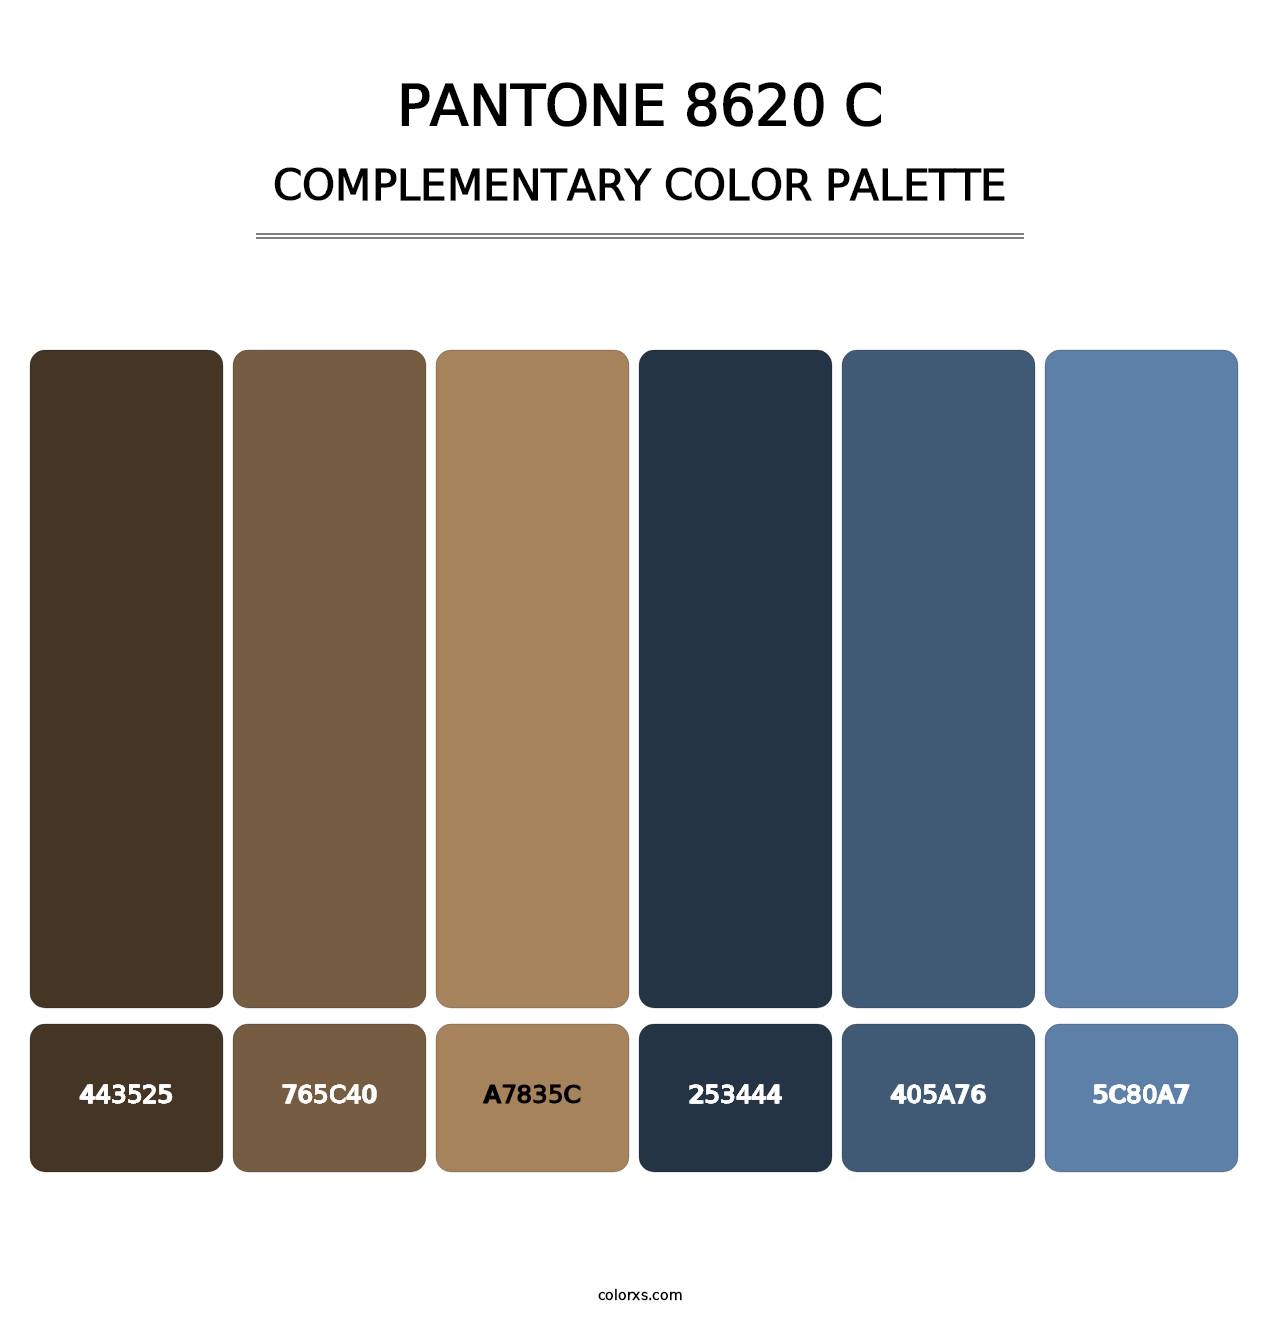 PANTONE 8620 C - Complementary Color Palette